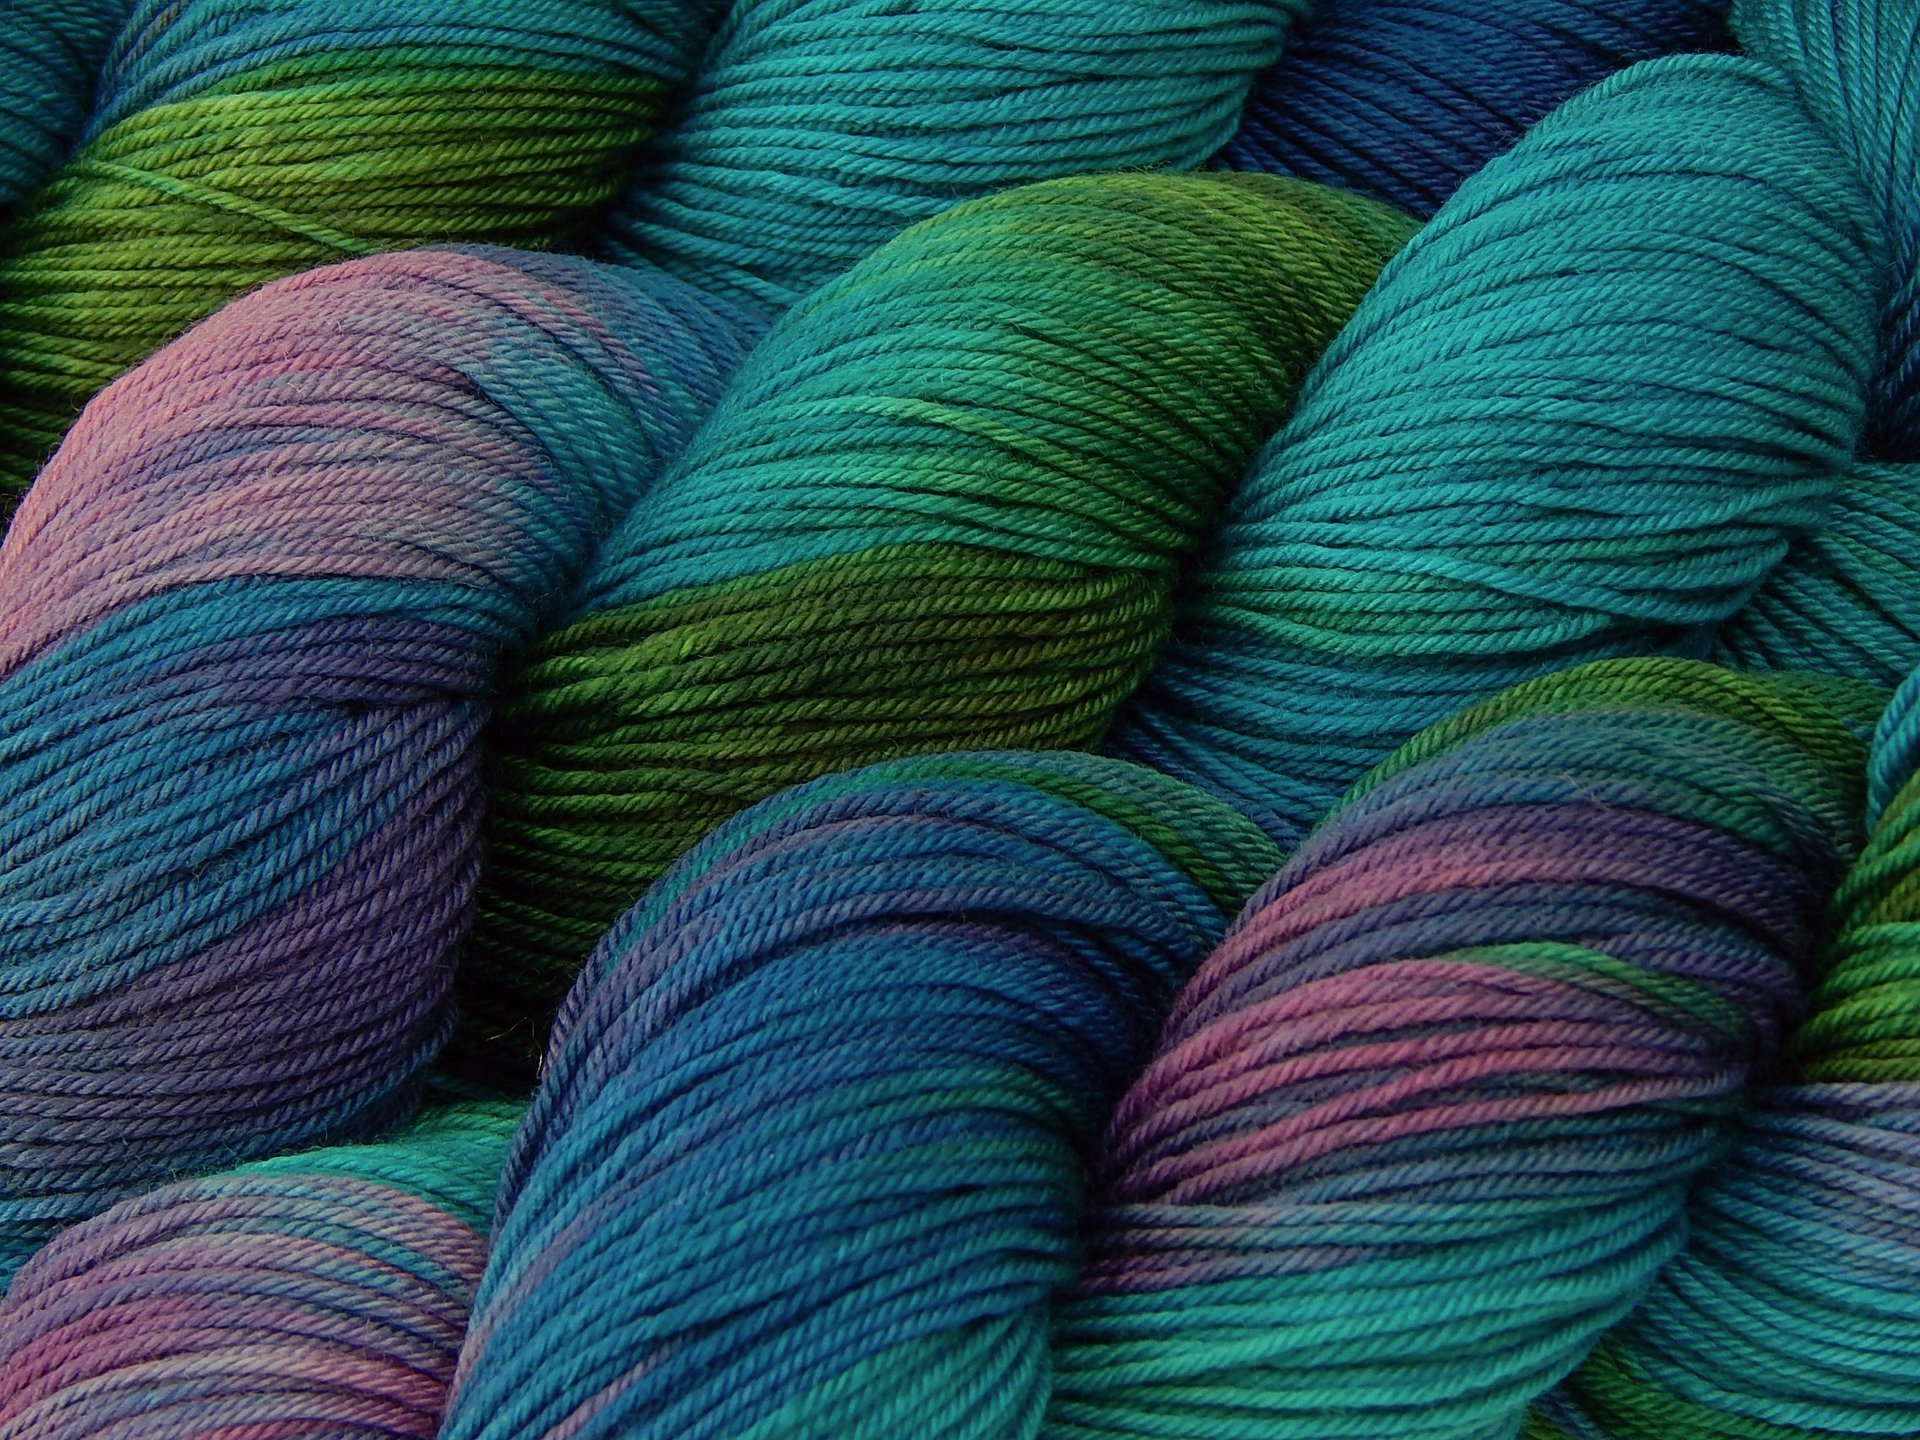 Hand Dyed Sock Yarn, Fingering Weight 4 Ply Superwash Merino Wool - Aegean Multi - Turquoise Blue Green Purple Knitting Yarn, Indie Hand Dyed Yarn